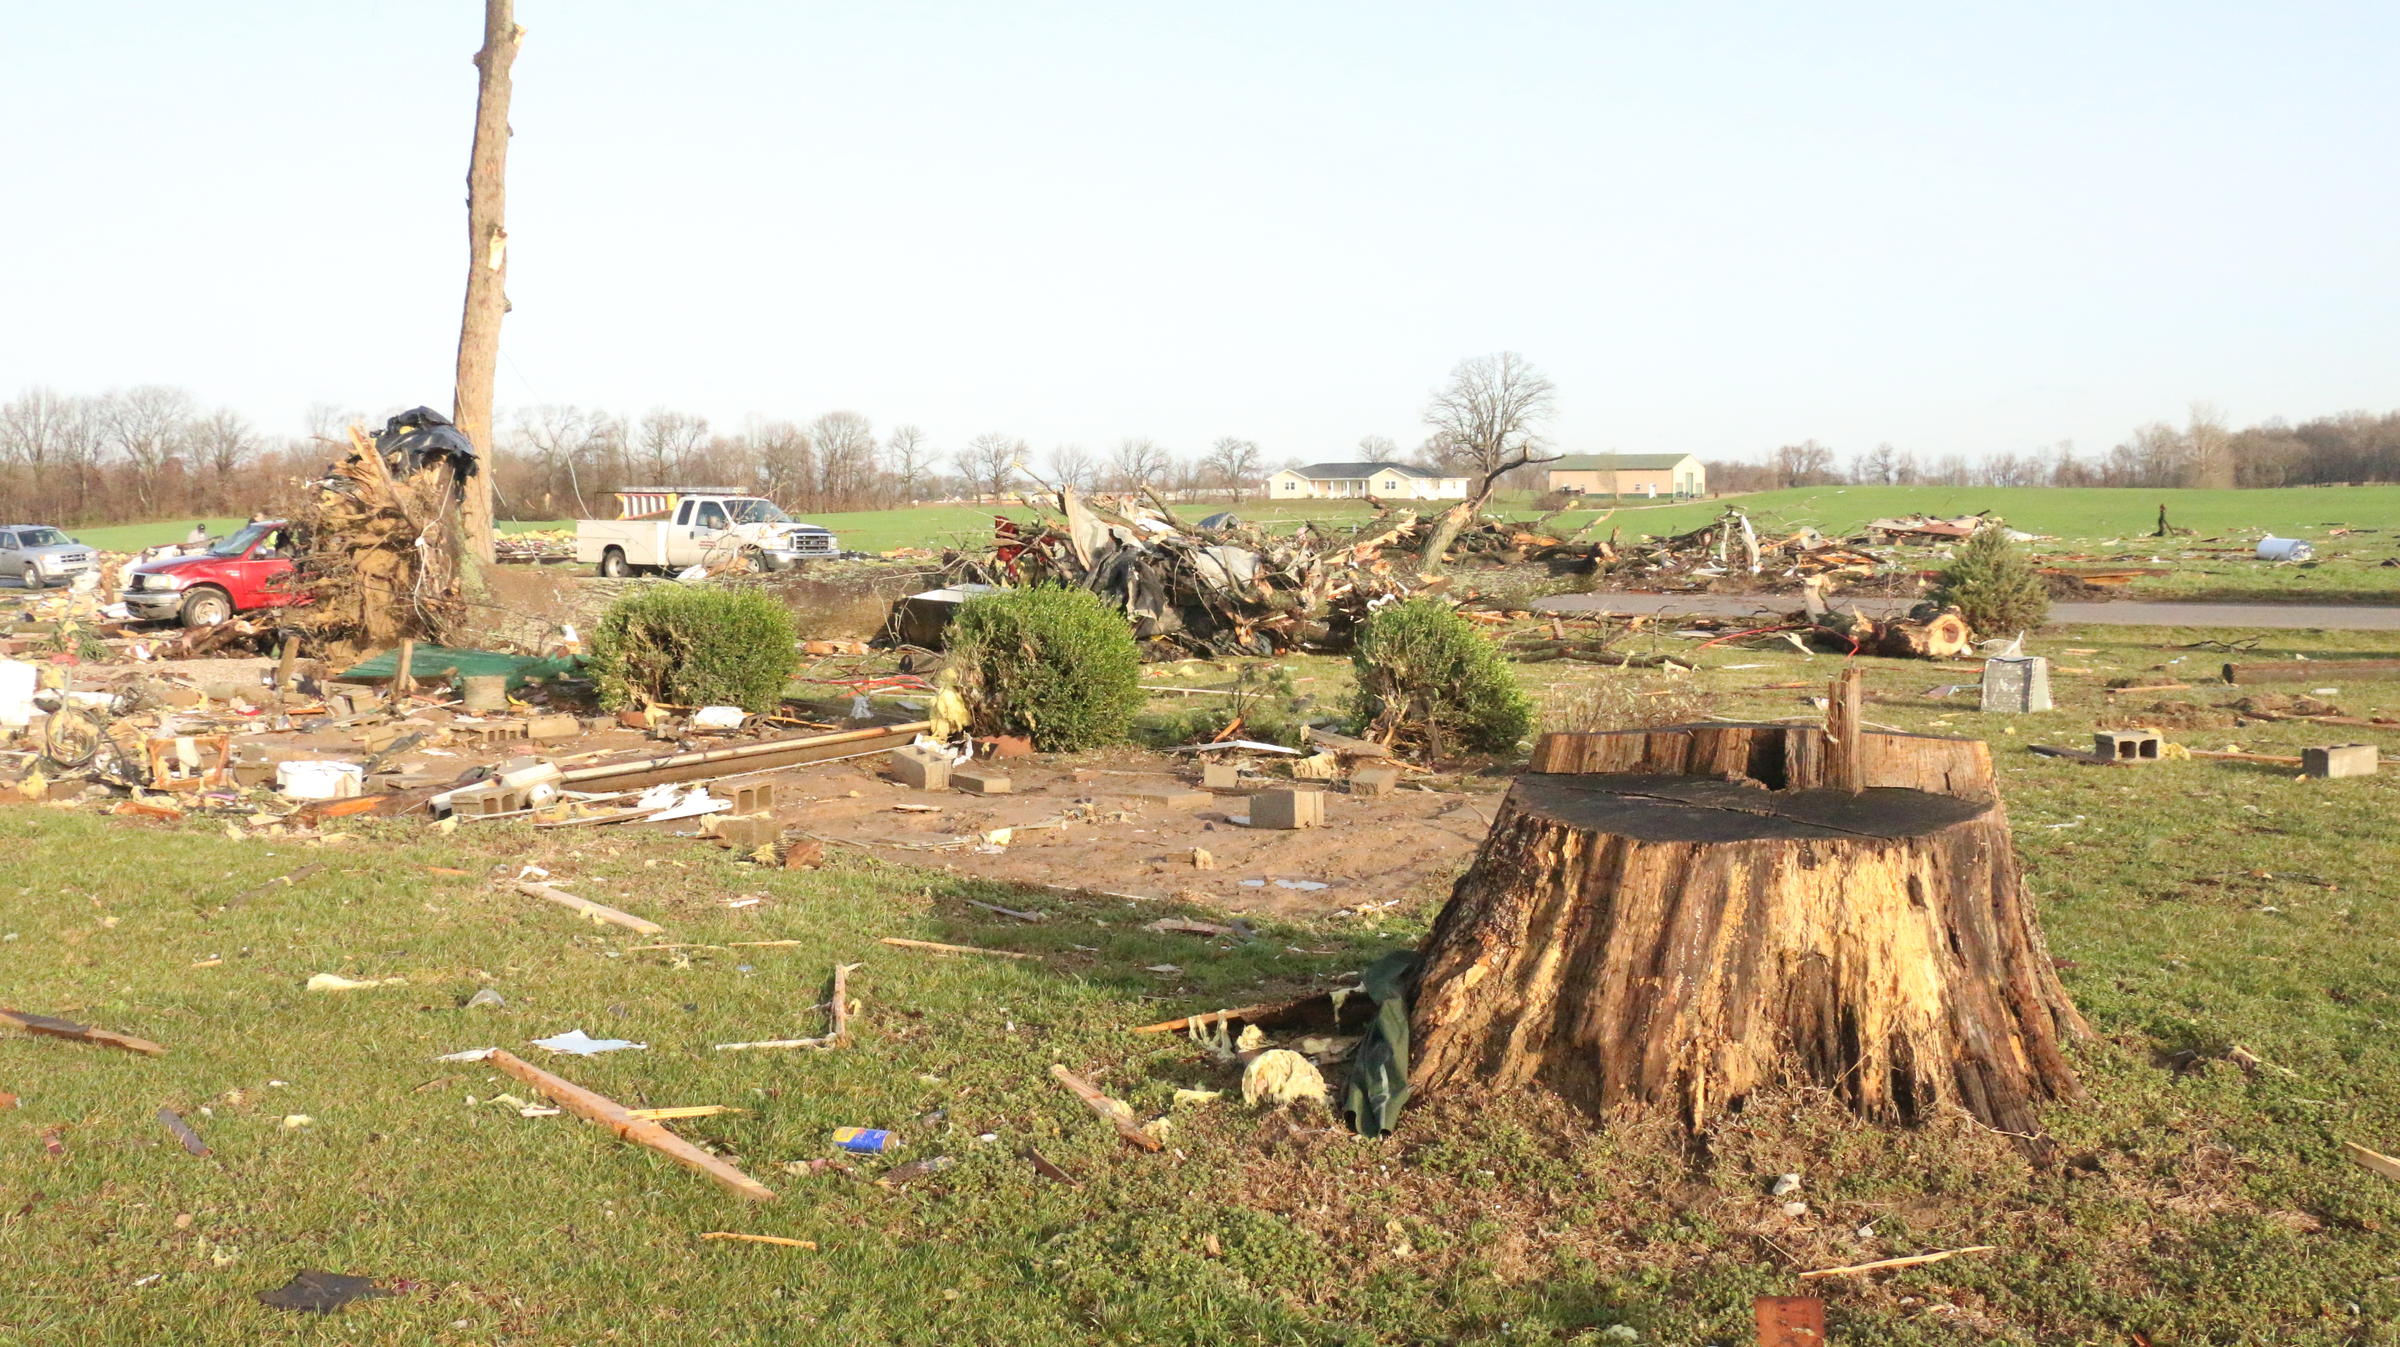 Tornado Damage Clean Up Underway in Southern Indiana Indiana Public Radio